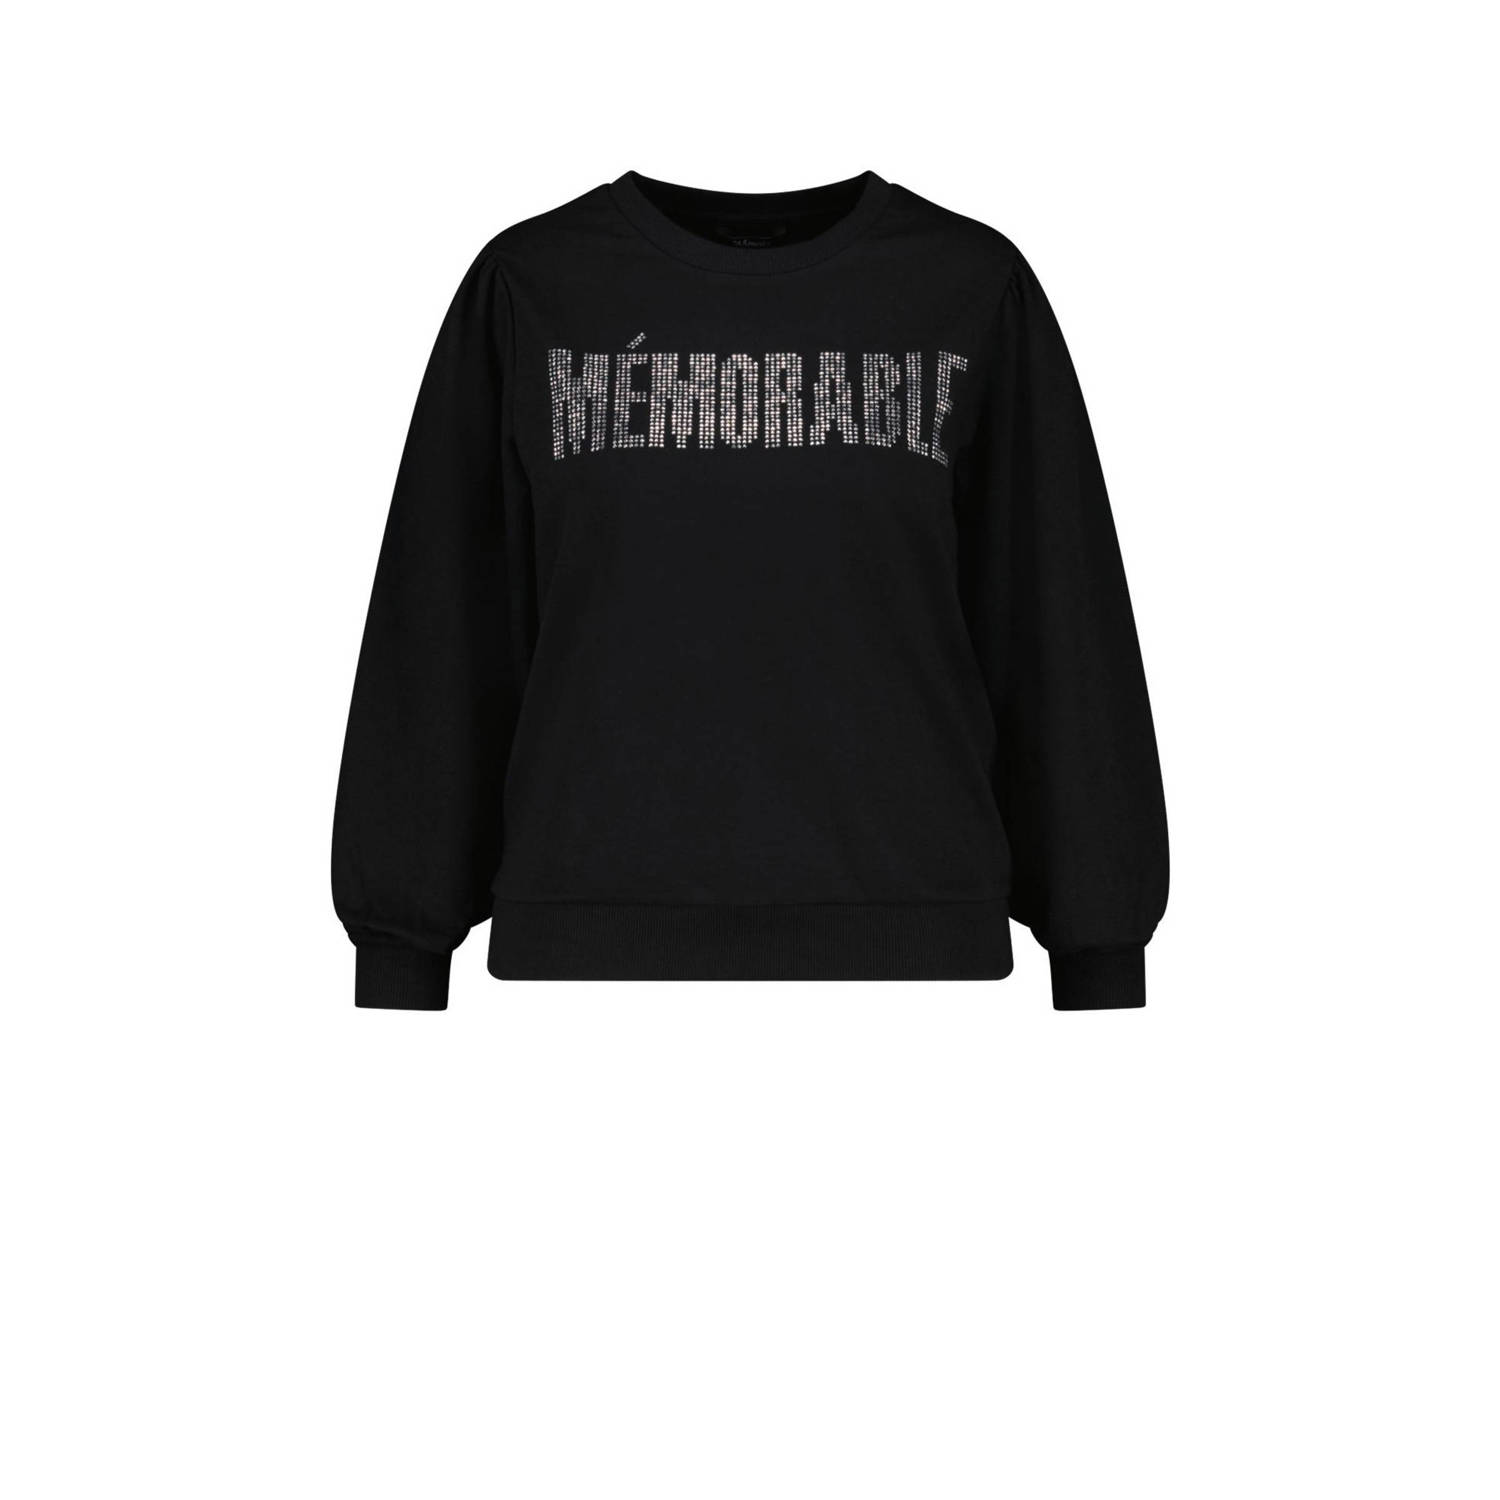 MS Mode sweater met tekst en strass steentjes zwart